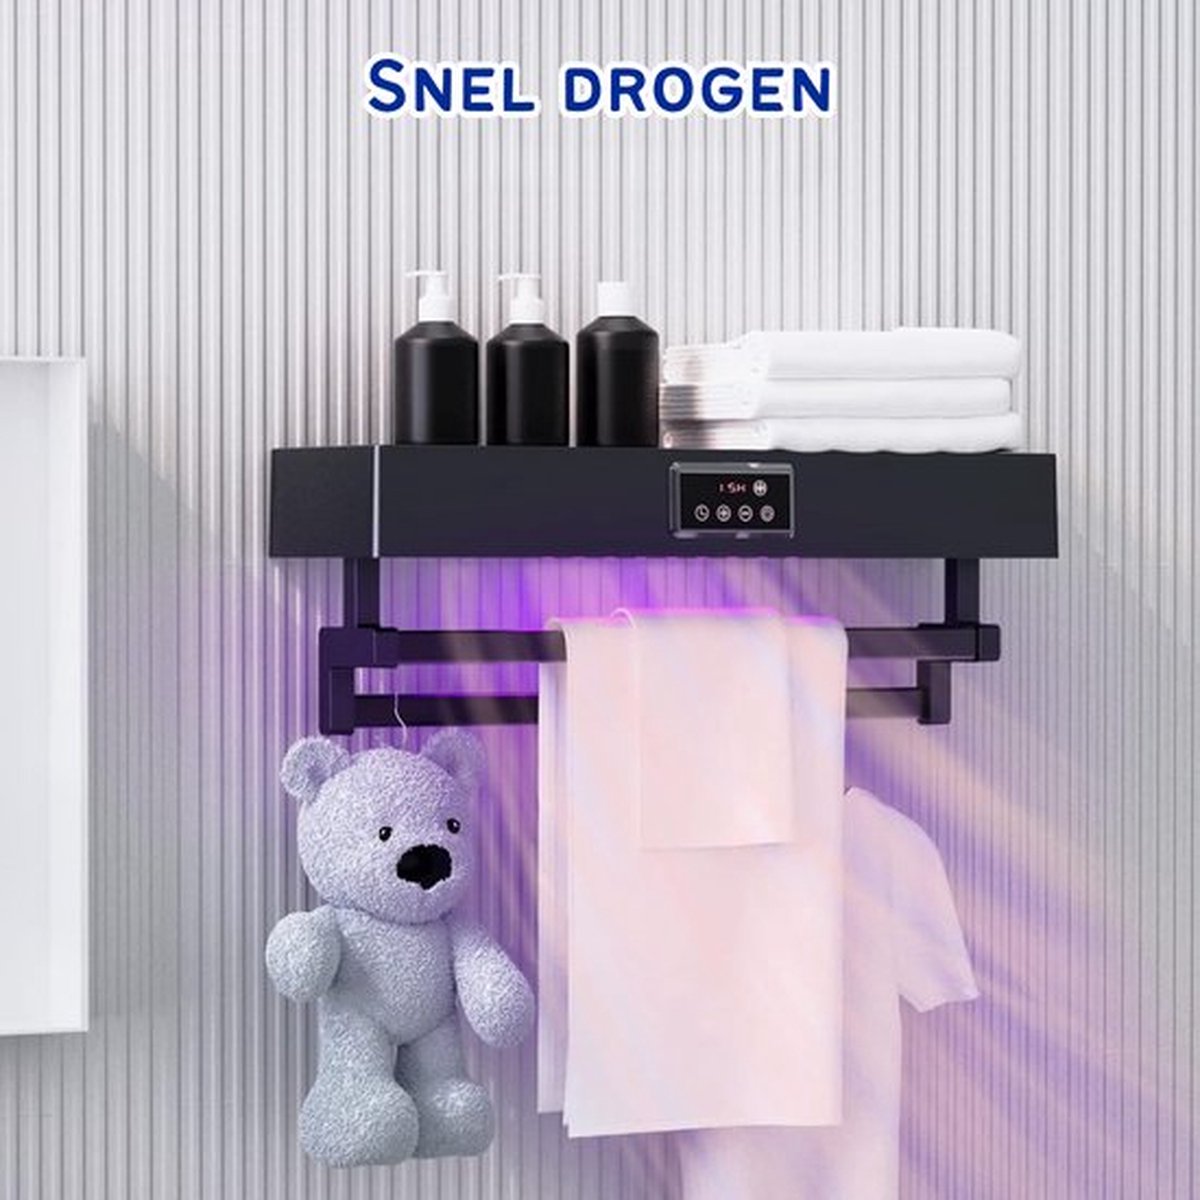 Handdoekrek - Elektrische Handdoekrek - Elektrisch Verwarmde Rek - UV-ontsmettingsmiddel en Snel Drogen 500W - Handdoekwarmer - Handdoekdroger voor Badkamer en Keuken